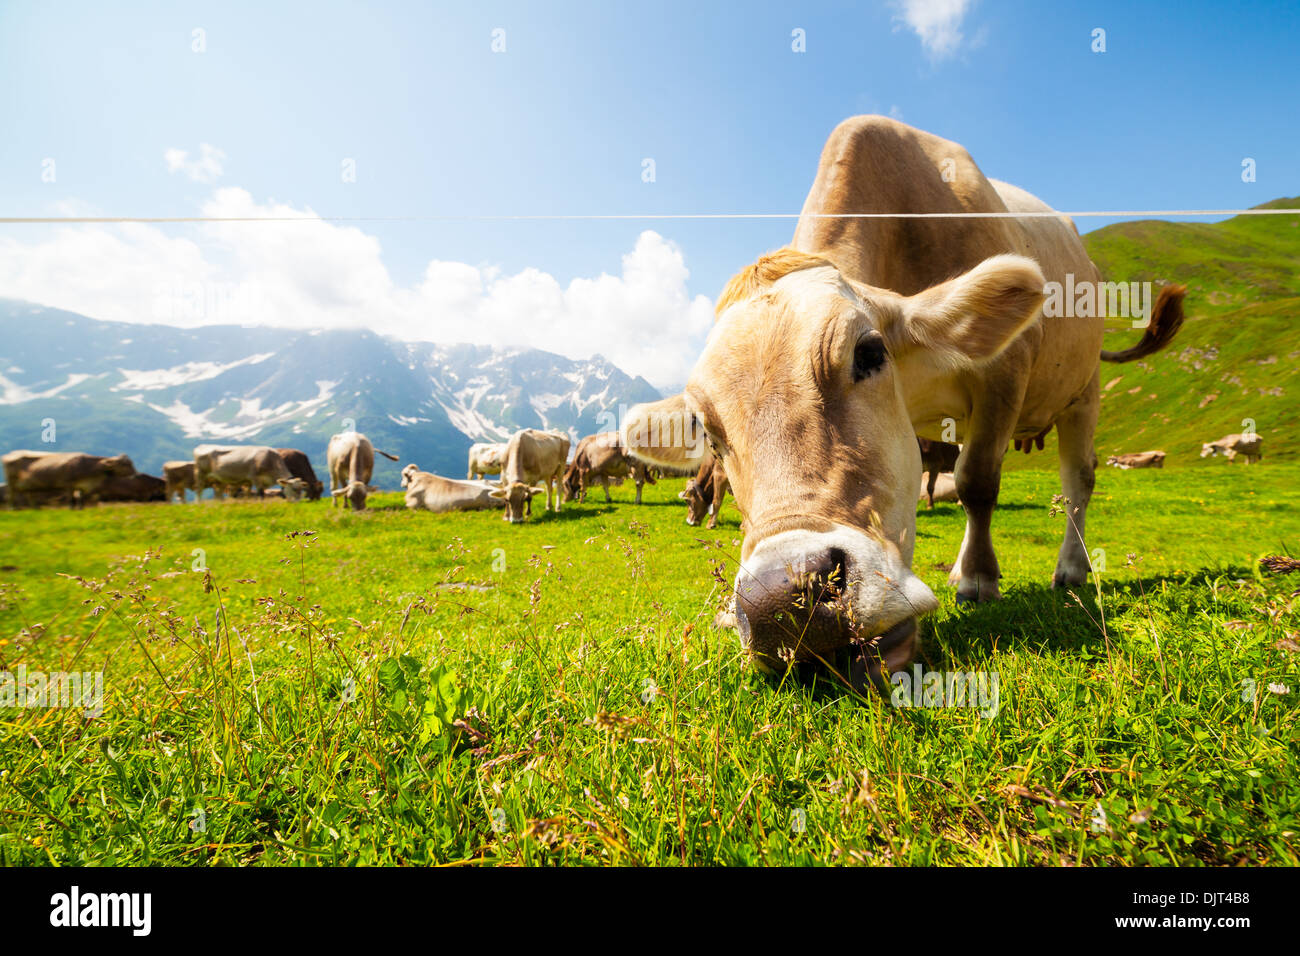 Cow grazing on grass field at St. Gotthard, Switzerland. Stock Photo